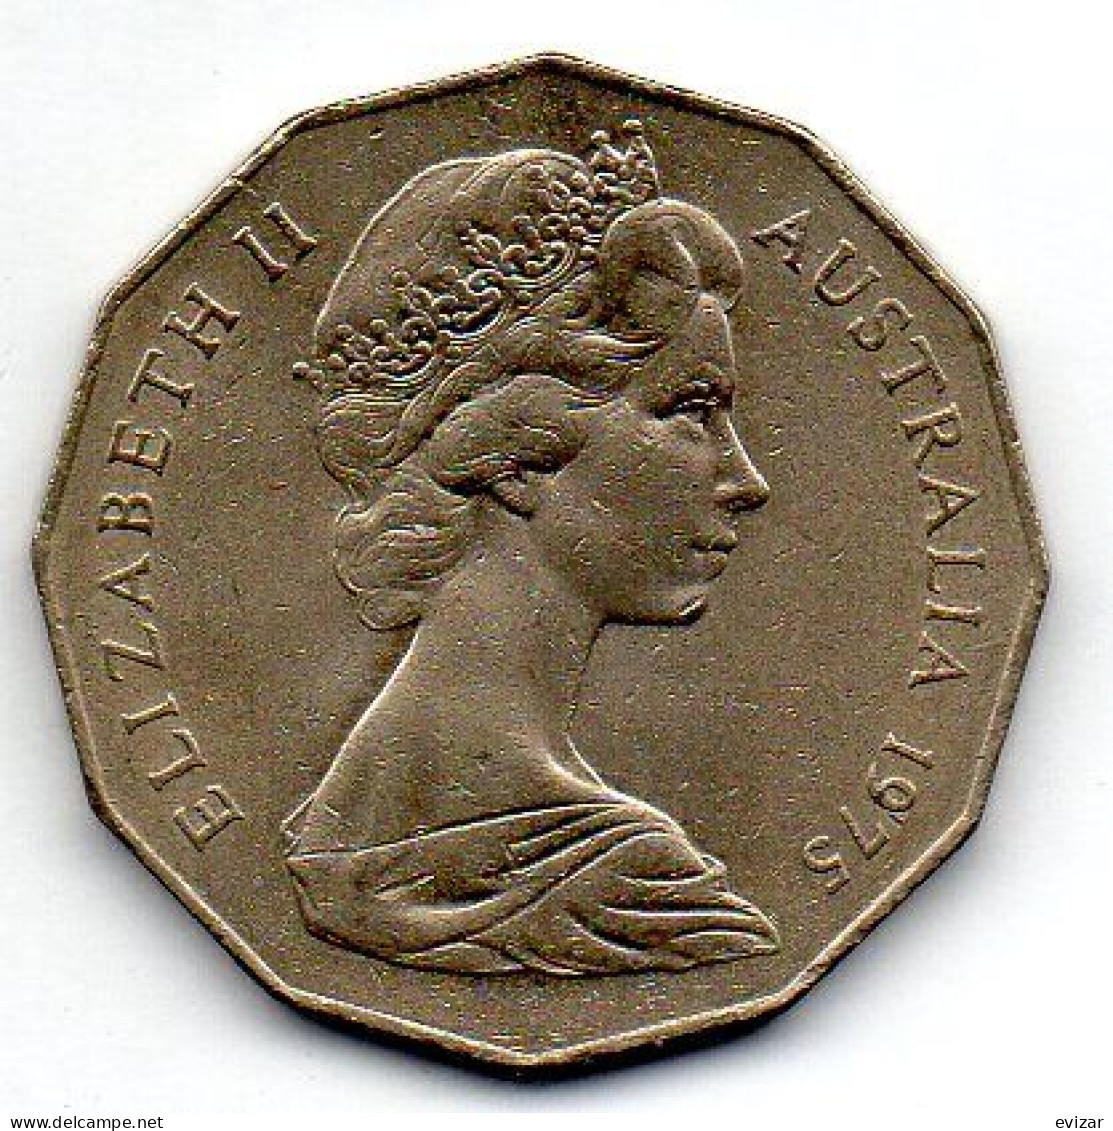 AUSTRALIA, 50 Cents, Copper-Nickel, Year 1975, KM # 68 - 50 Cents